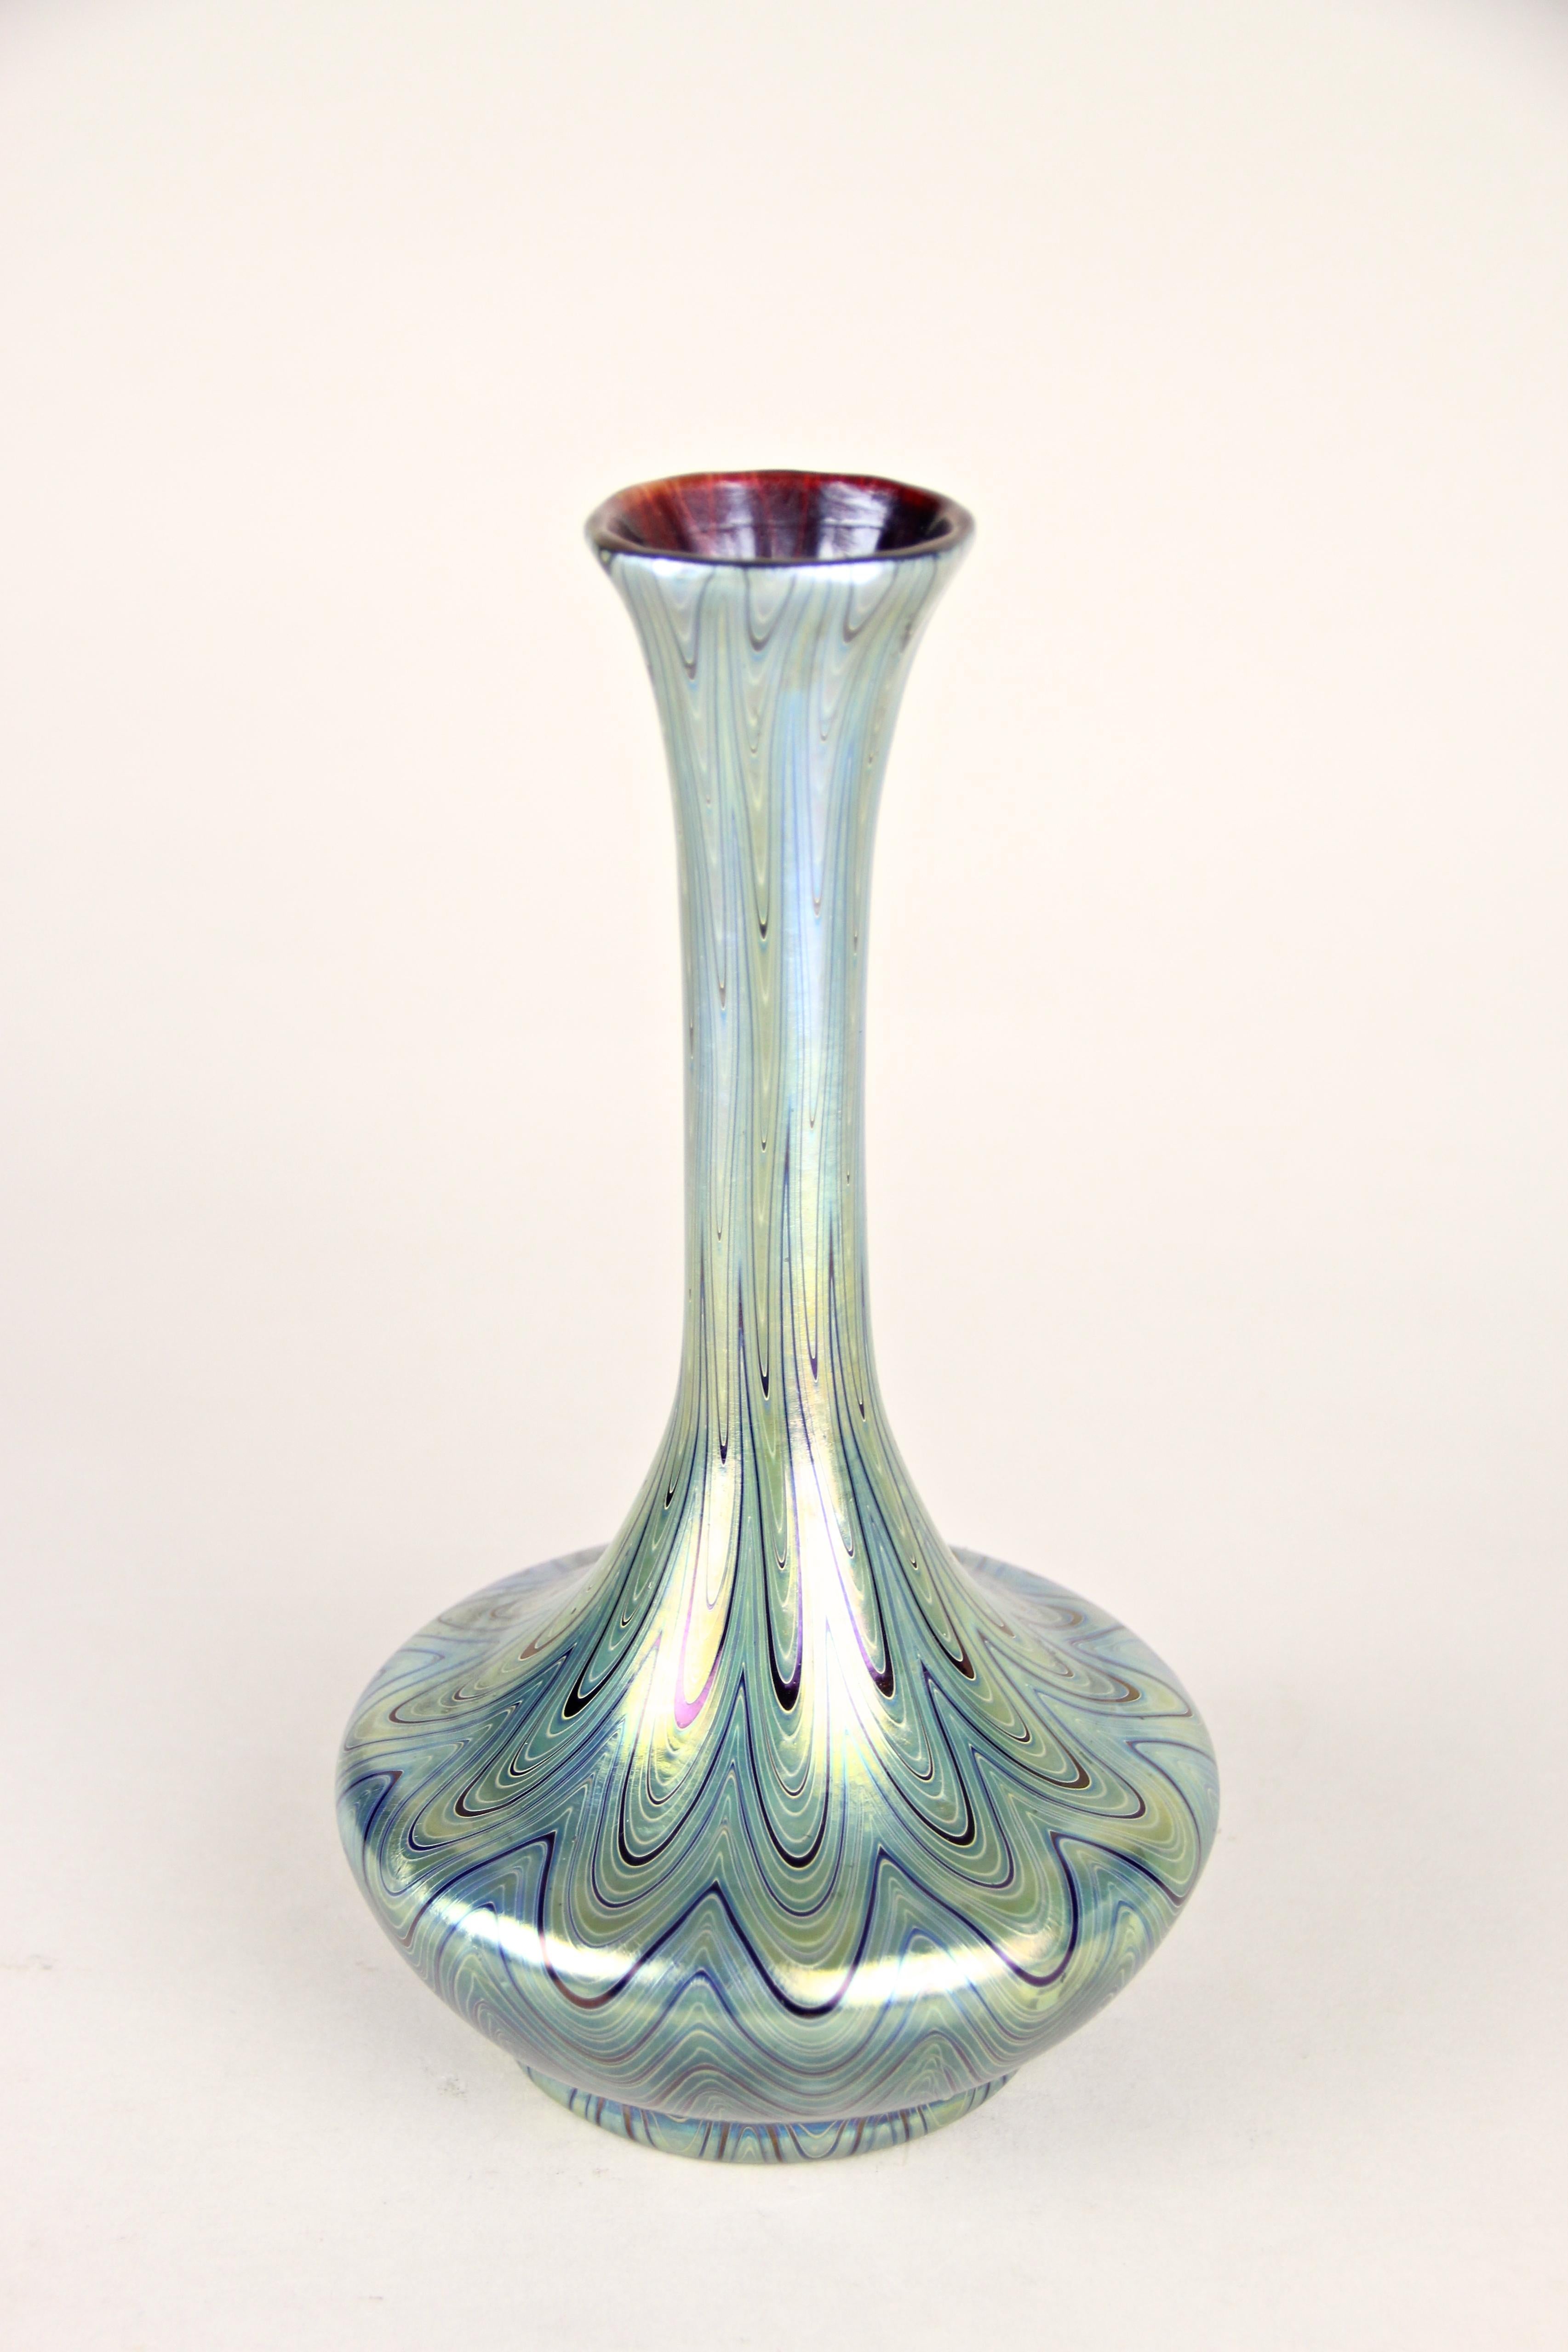 Czech Loetz Witwe Glass Vase Rubin Phänomen Genre 6893 Iriscident, Bohemia, circa 1899 For Sale